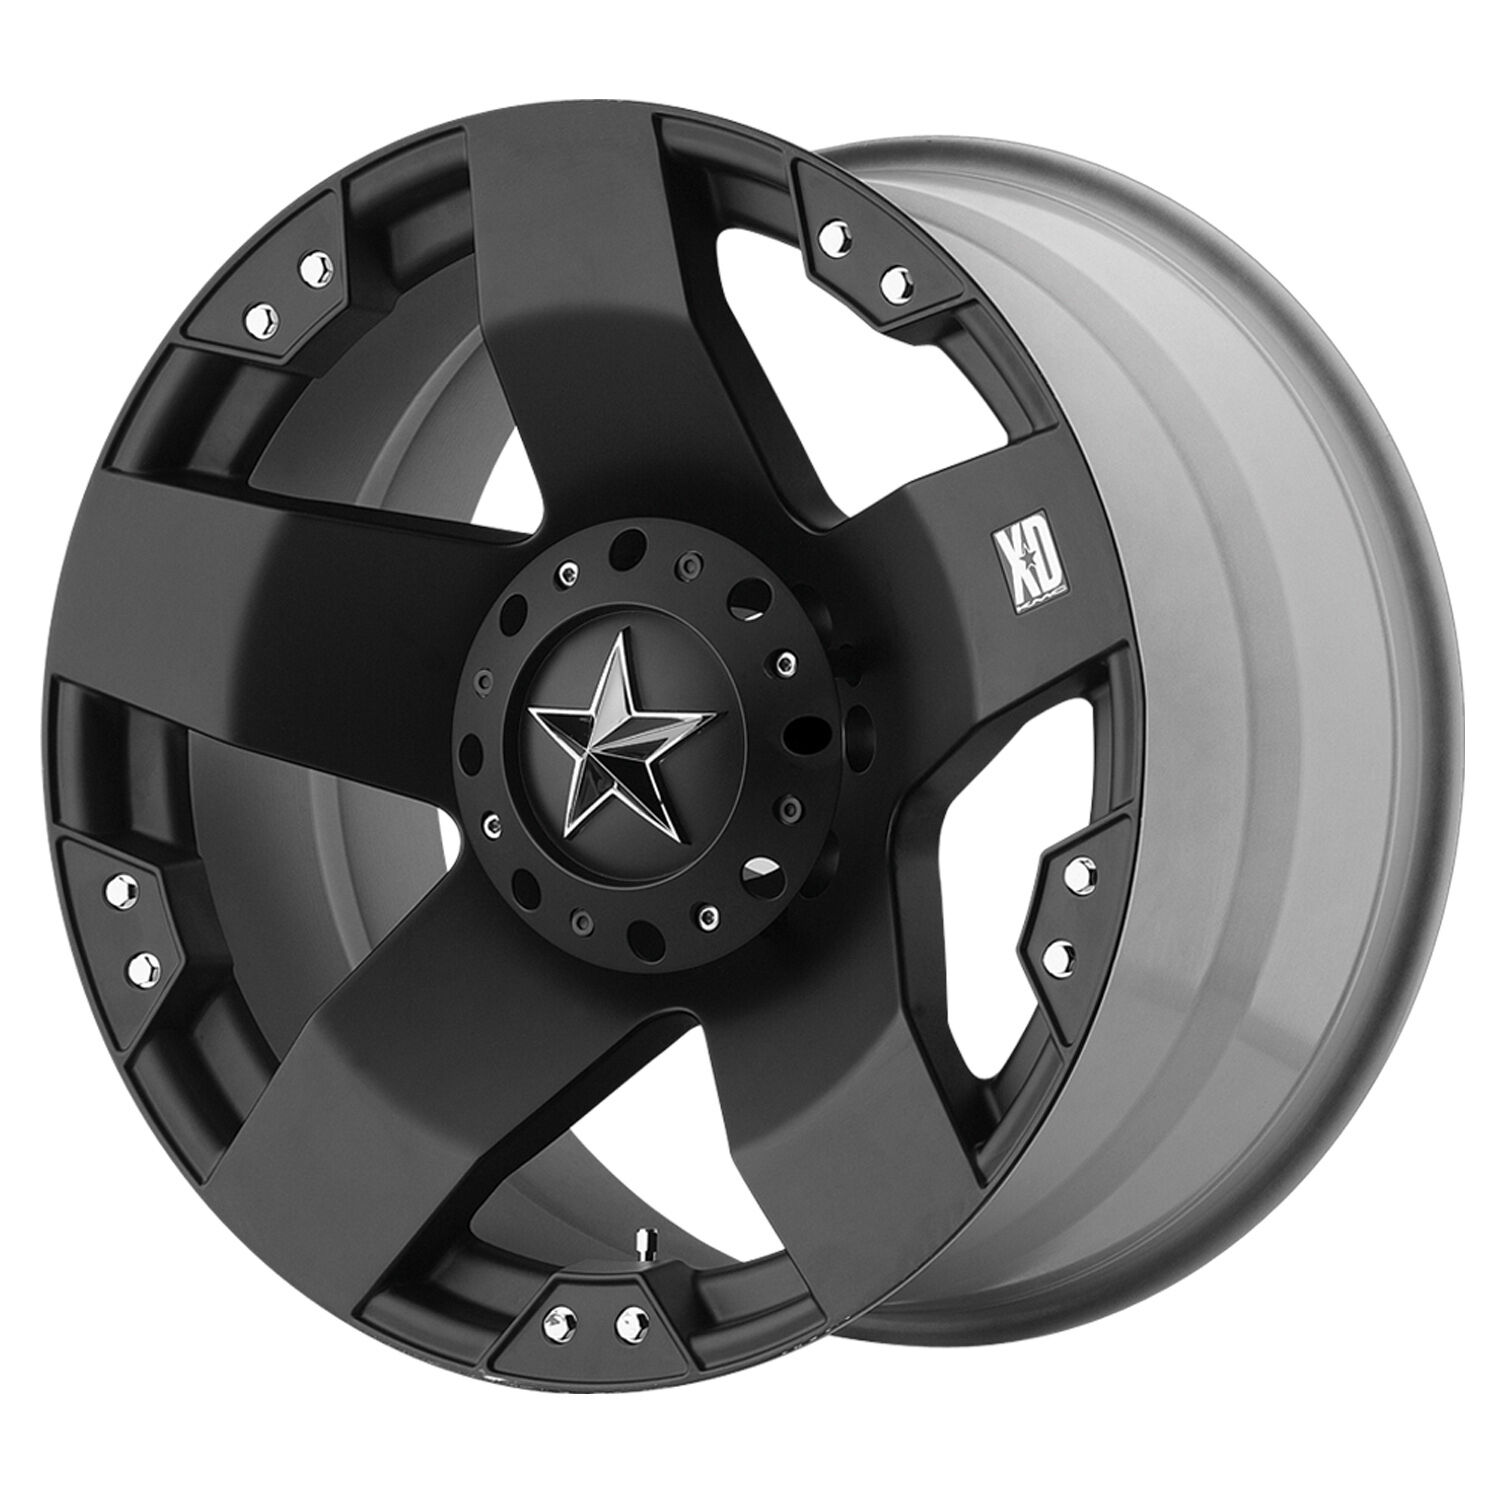 17x9 inch Black wheels rims KMC XD 775 Rockstar Jeep Wrangler 2007-2014 only 5x5